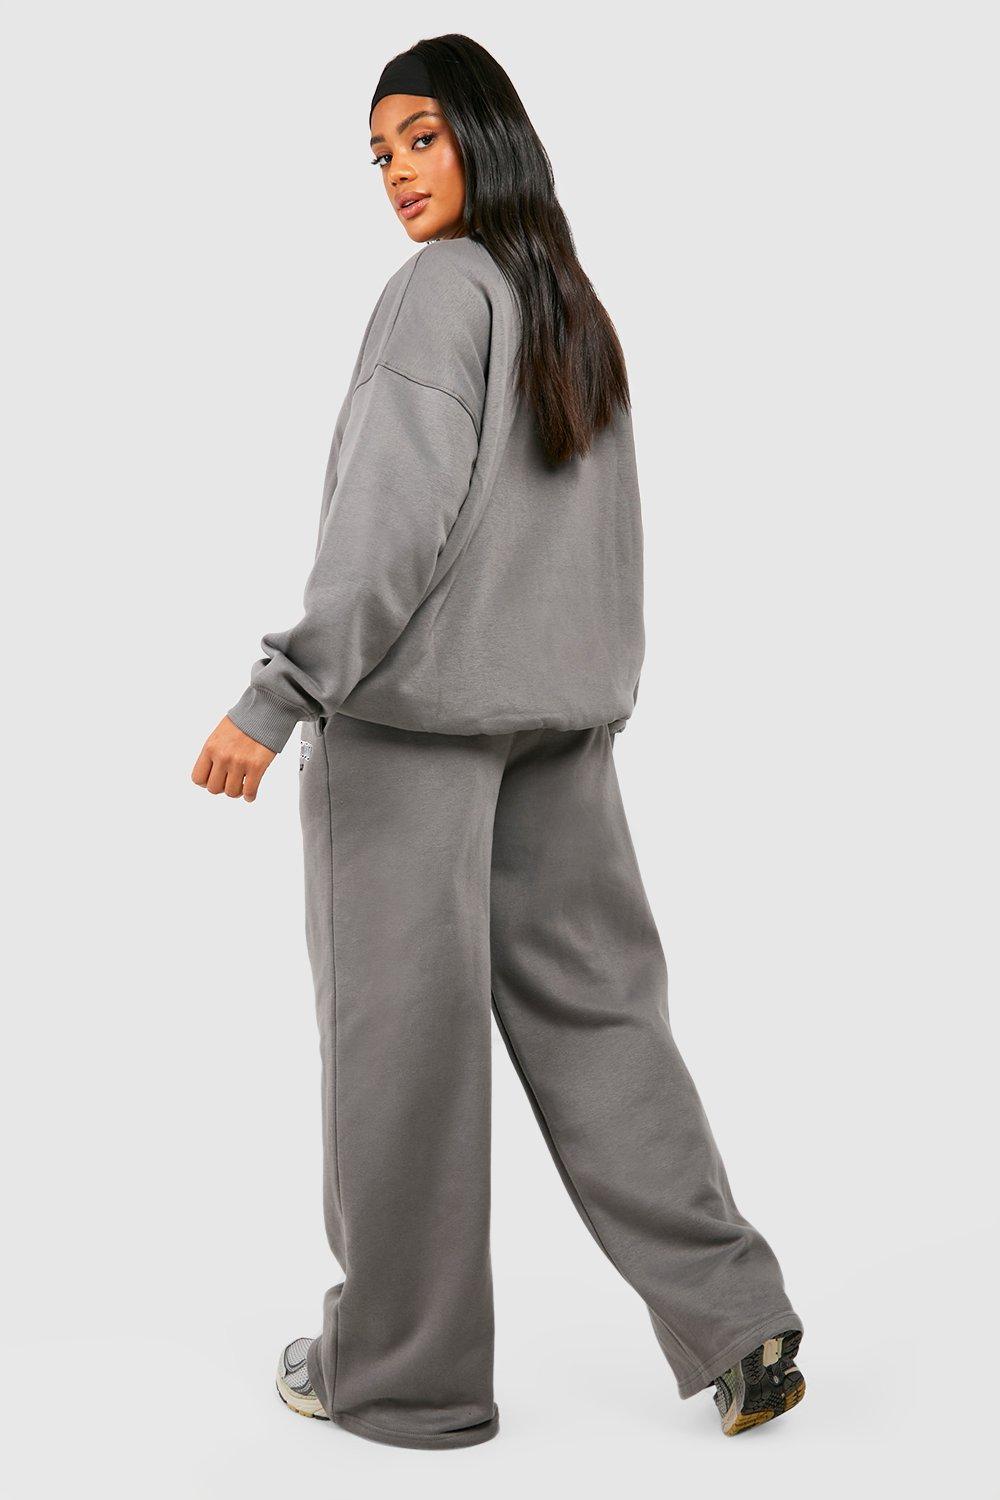 JNGSA Women's Two Piece Cotton Linen Set Plain Button Long Sleeve Shirt and  Wide Leg Pants with Pocket Loose Lounge Set Black S